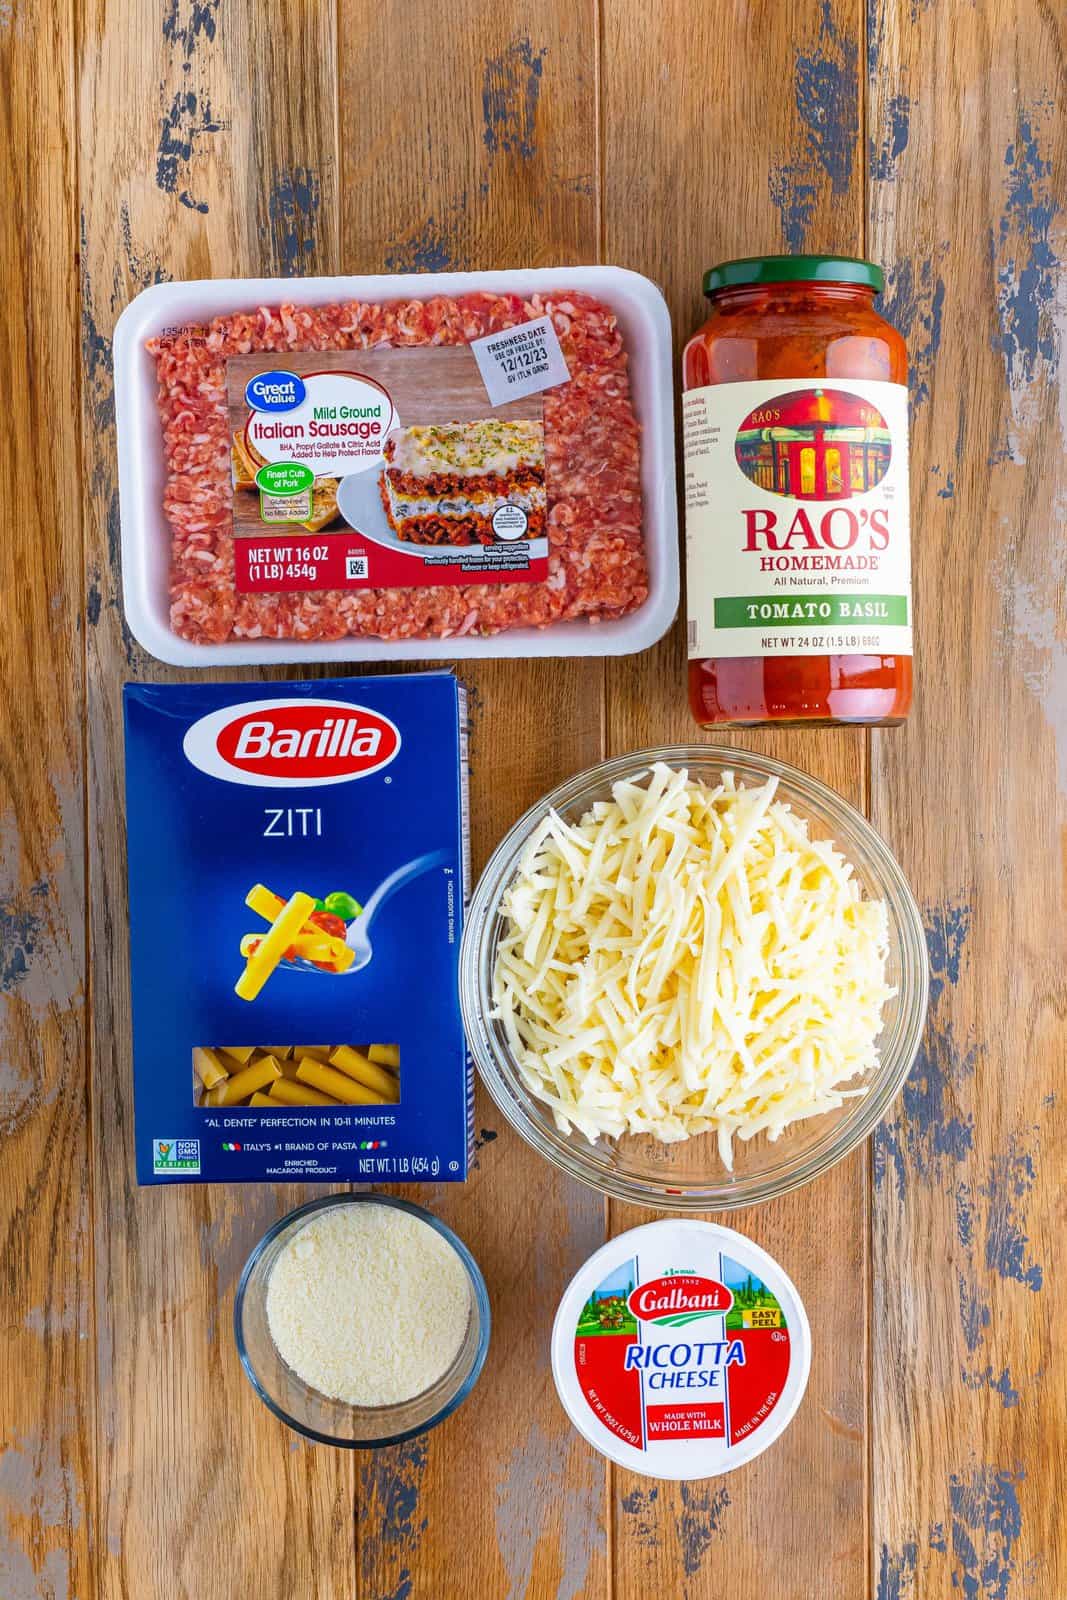 Ziti pasta noodles, Italian ground sausage, pasta sauce, Grated Parmesan cheese, ricotta cheese, and shredded mozzarella cheese.